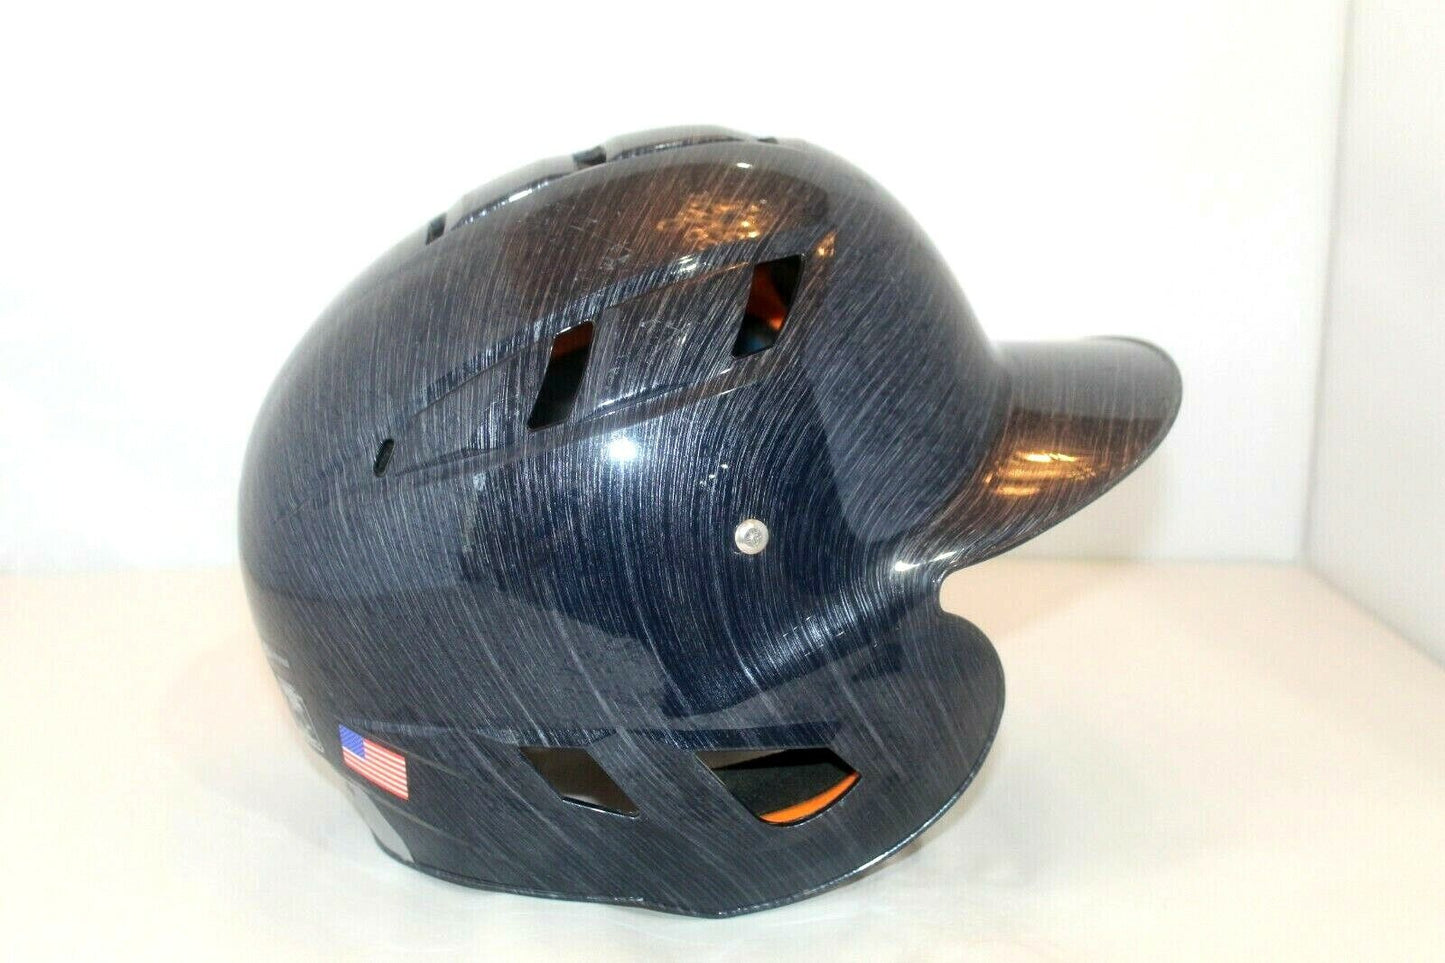 *MINT* Schutt Batting Helmet Black with Silver Swirl Model 325650 M  - SSMC BAH